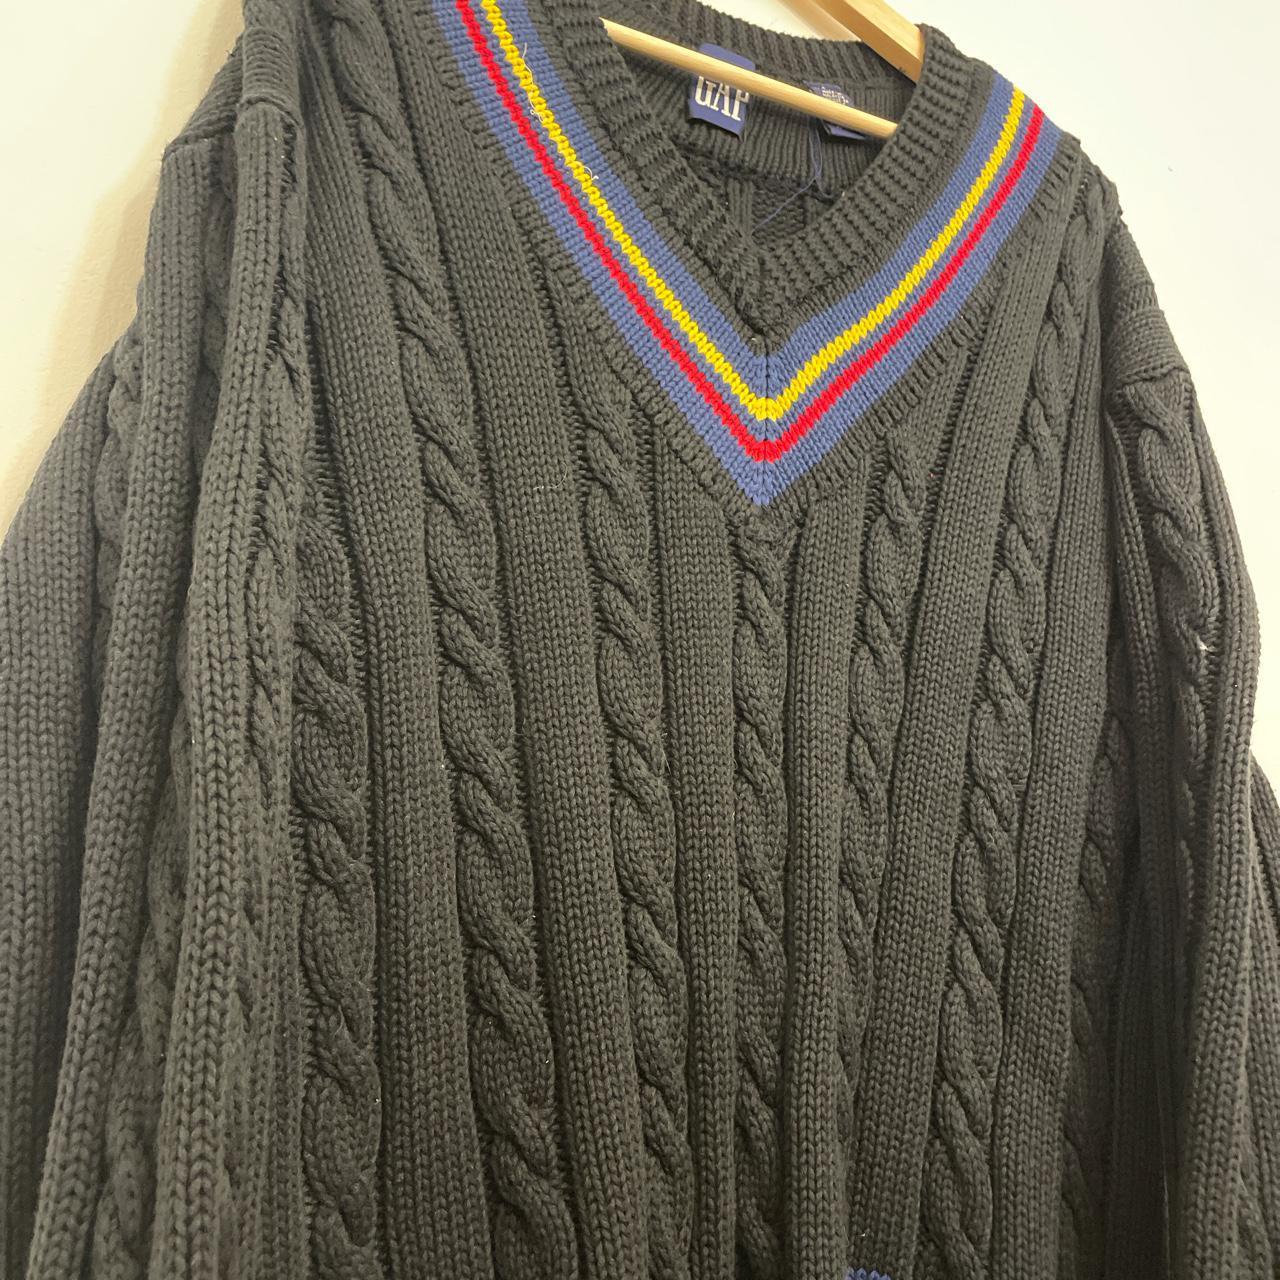 Product Image 2 - Vintage Gap Sweater 
100% Cotton